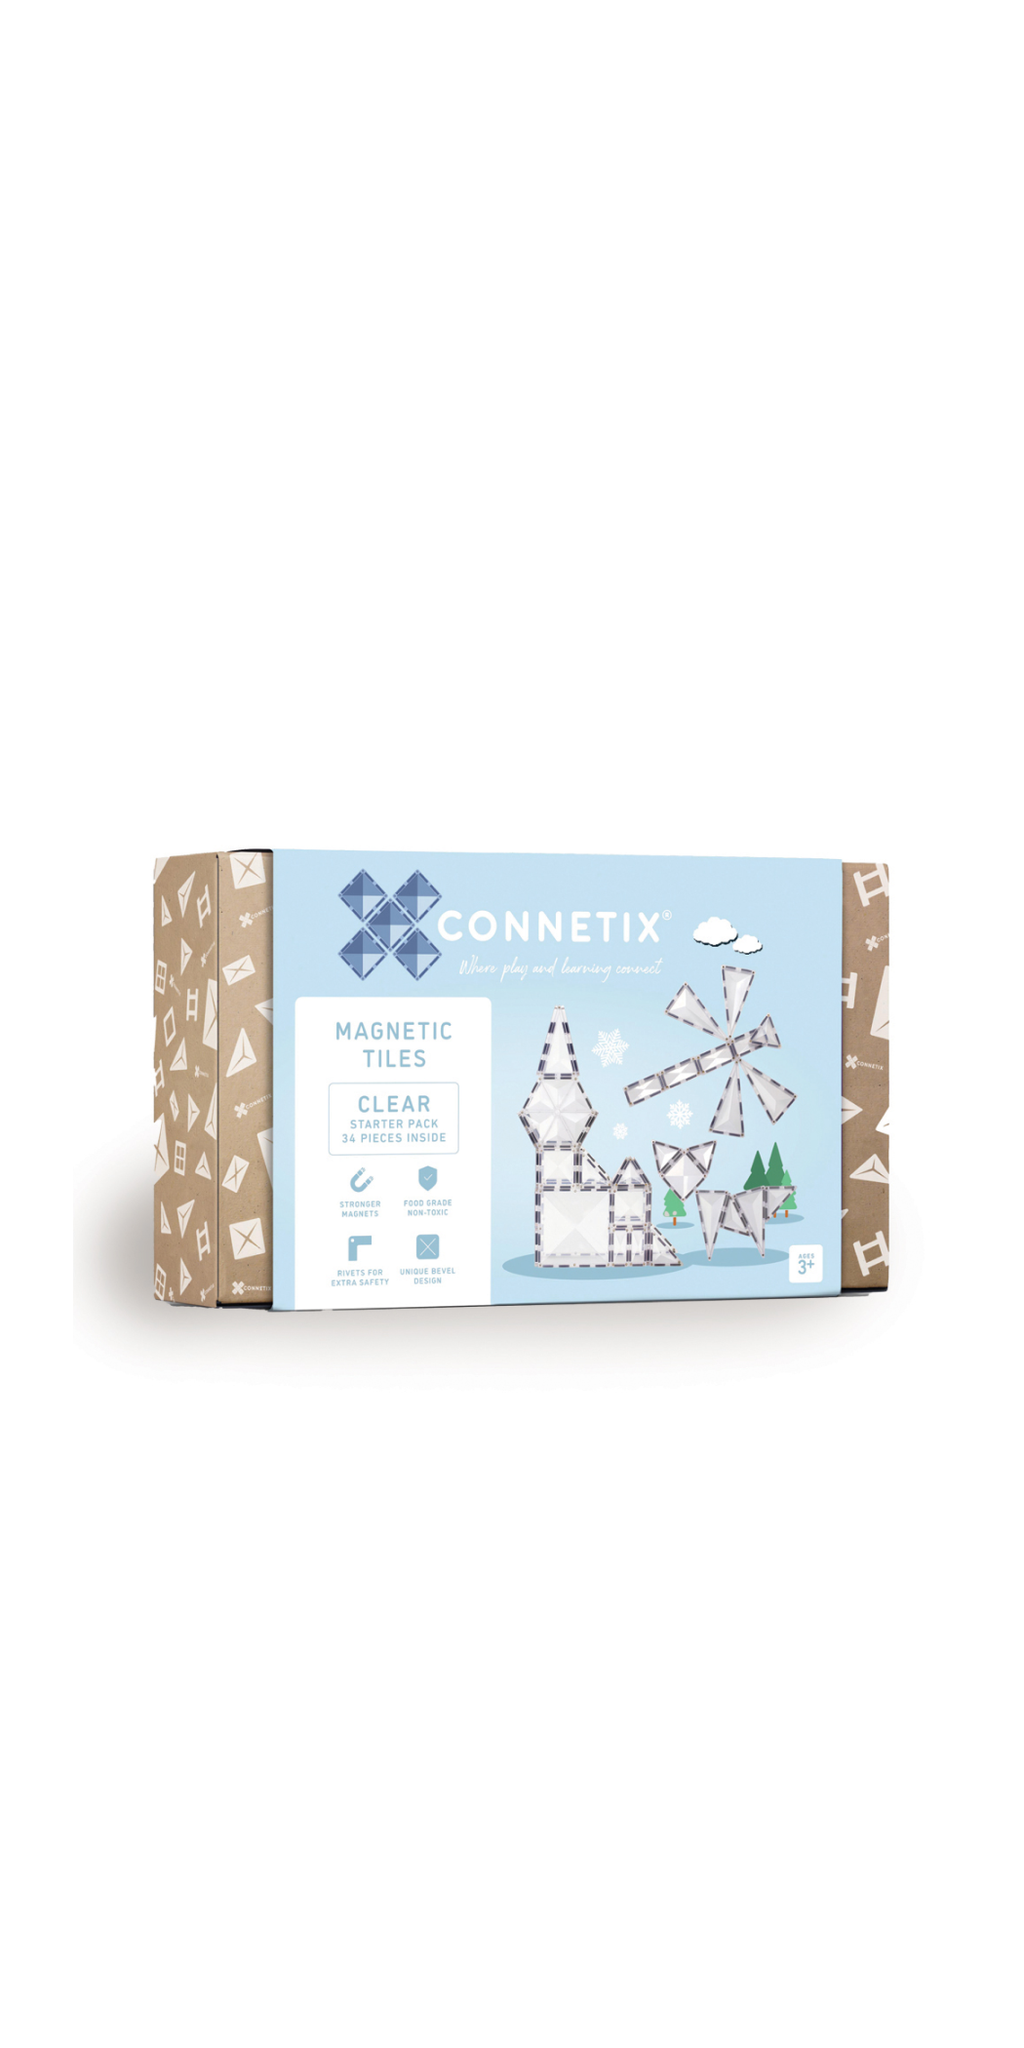 Connetix- new